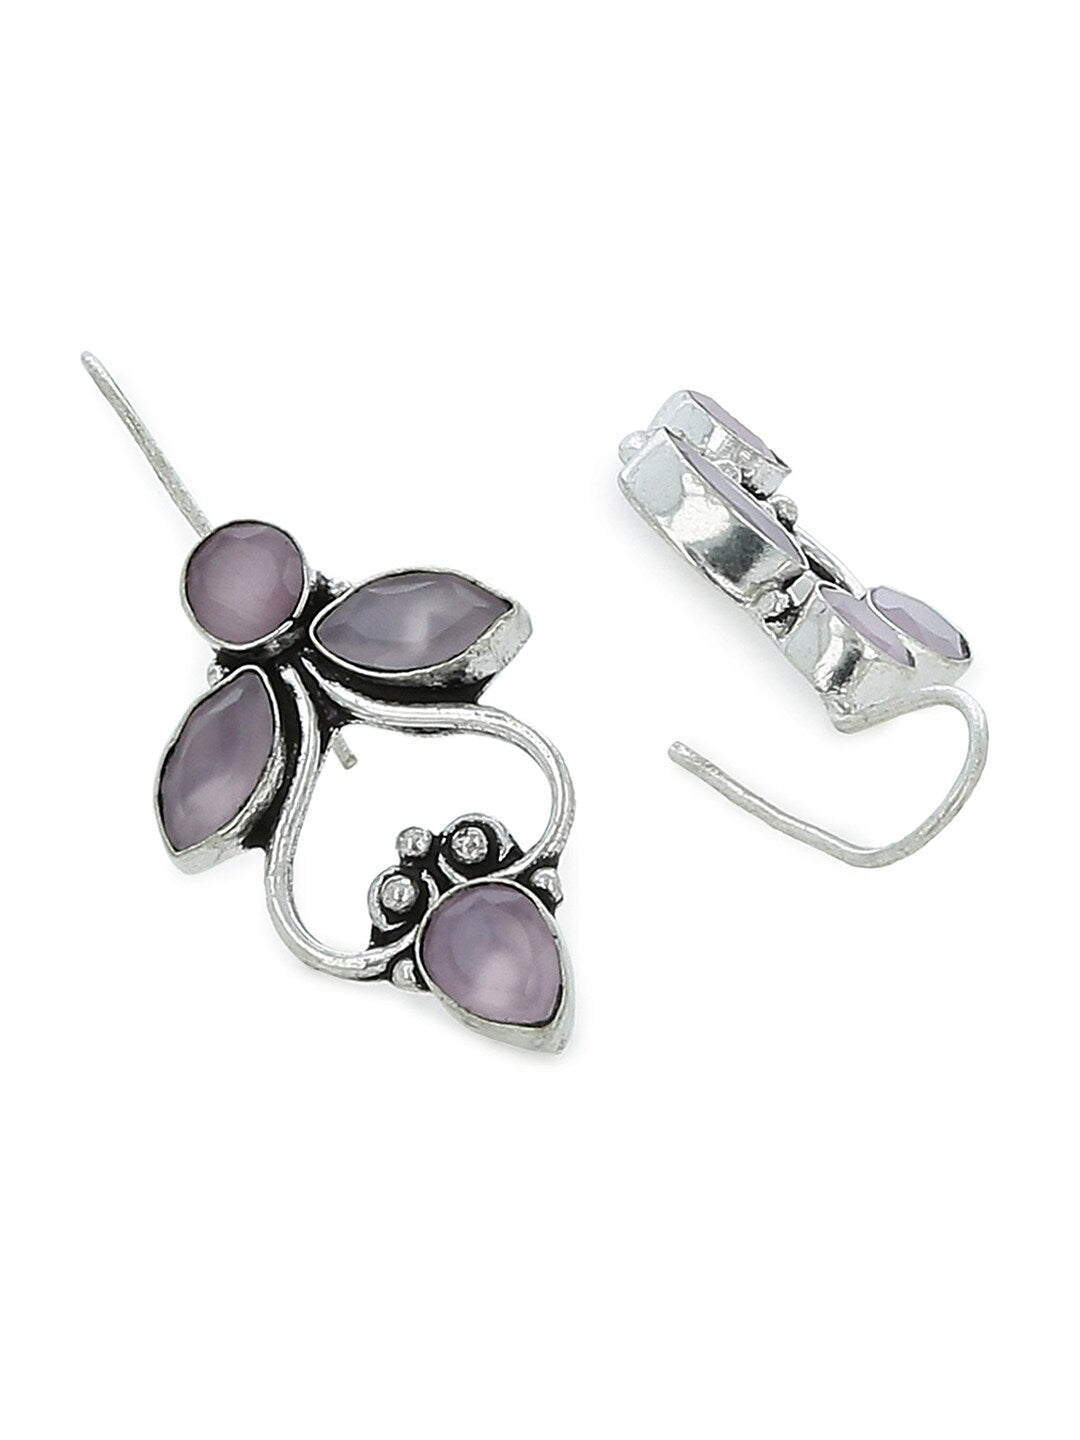 EL REGALO Grey Drop Earrings - for Women and Girls
Style ID: 17119256